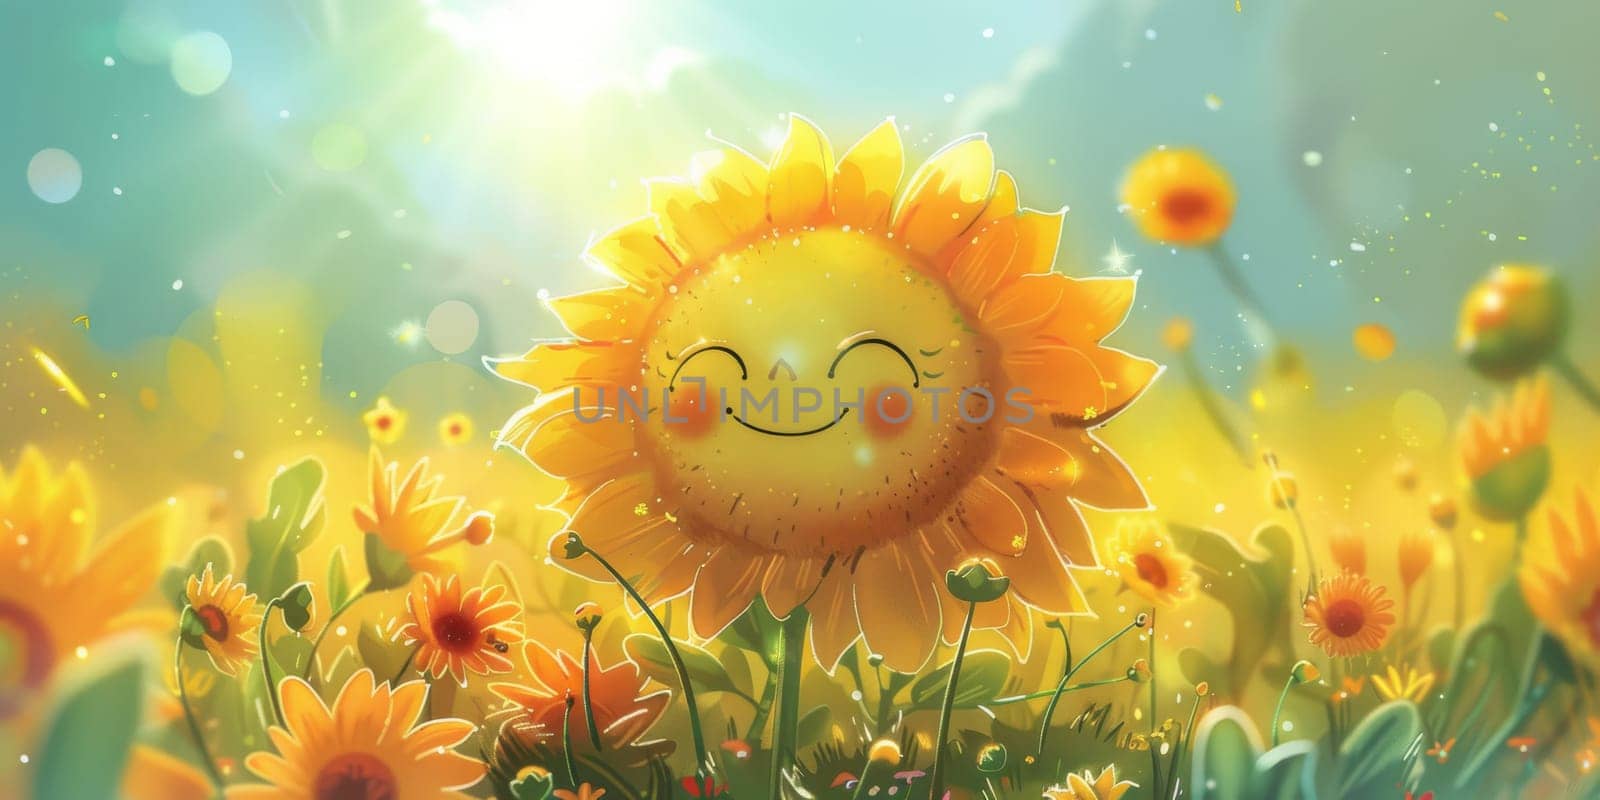 Cartoon smiling sunflower enjoying sunny day by Kadula